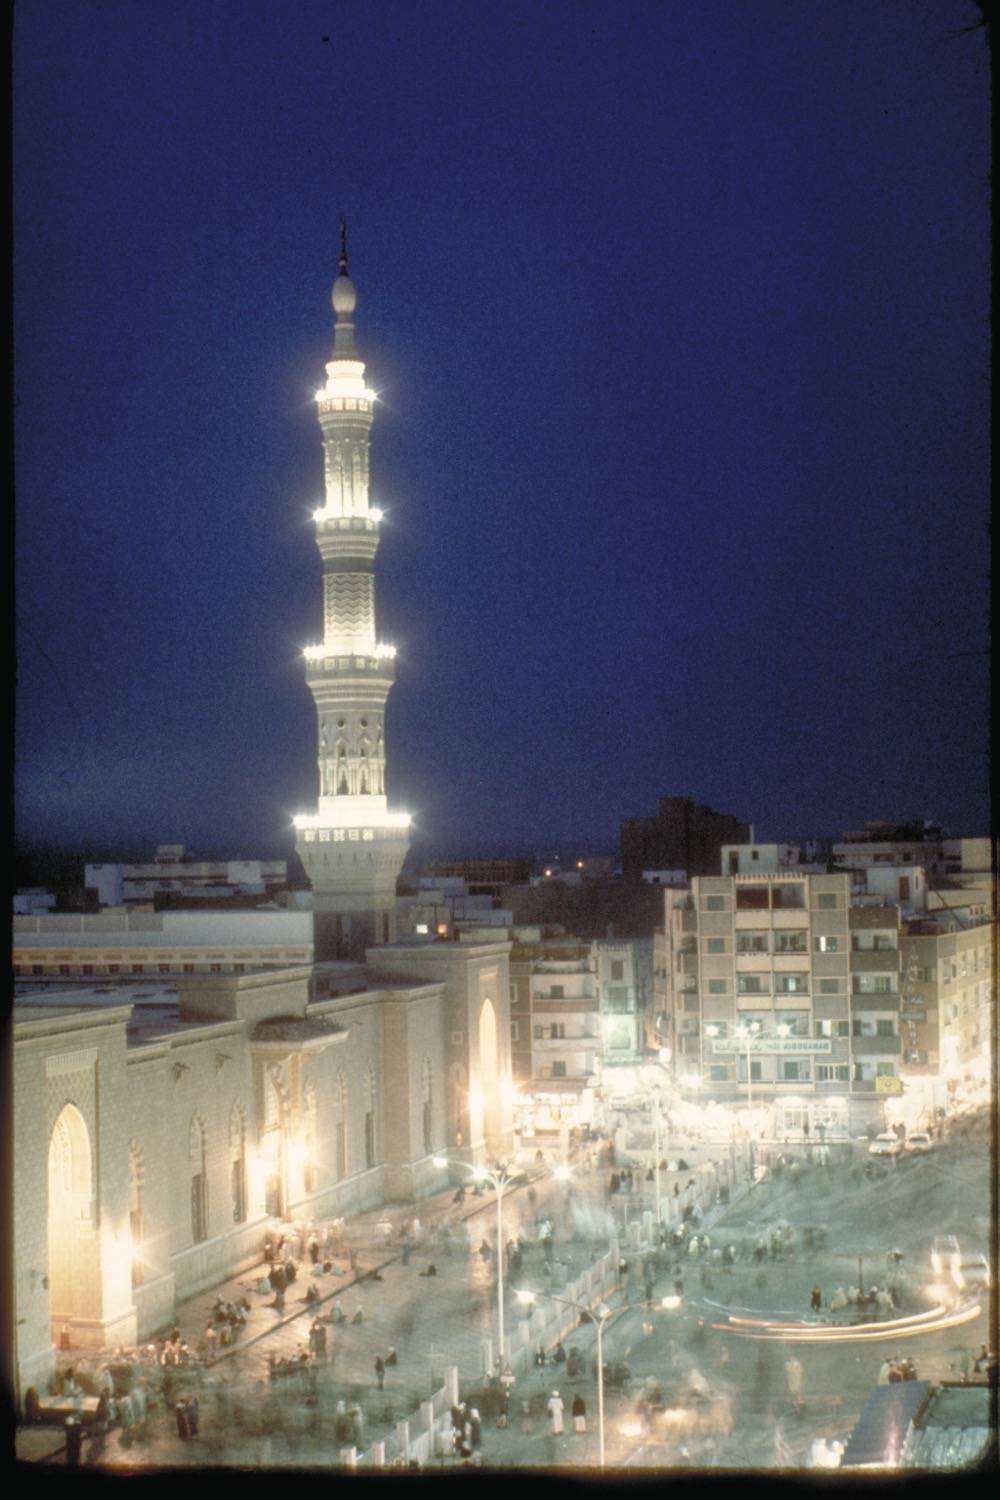 Bird's eye view toward a minaret